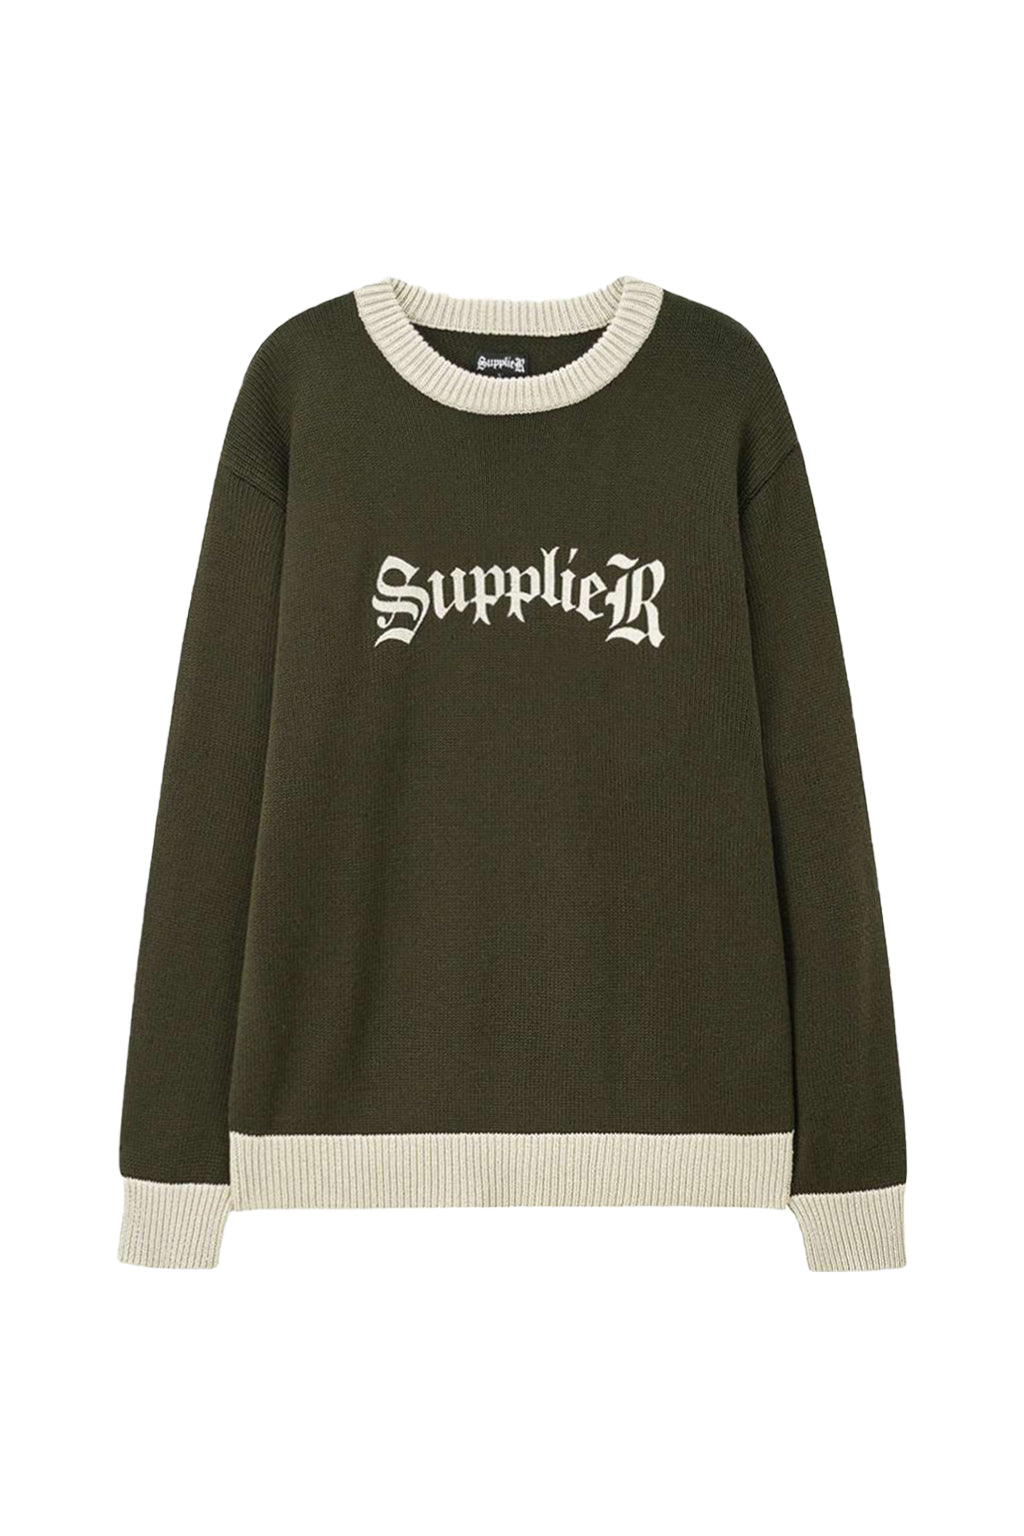 Supplier knit sweater